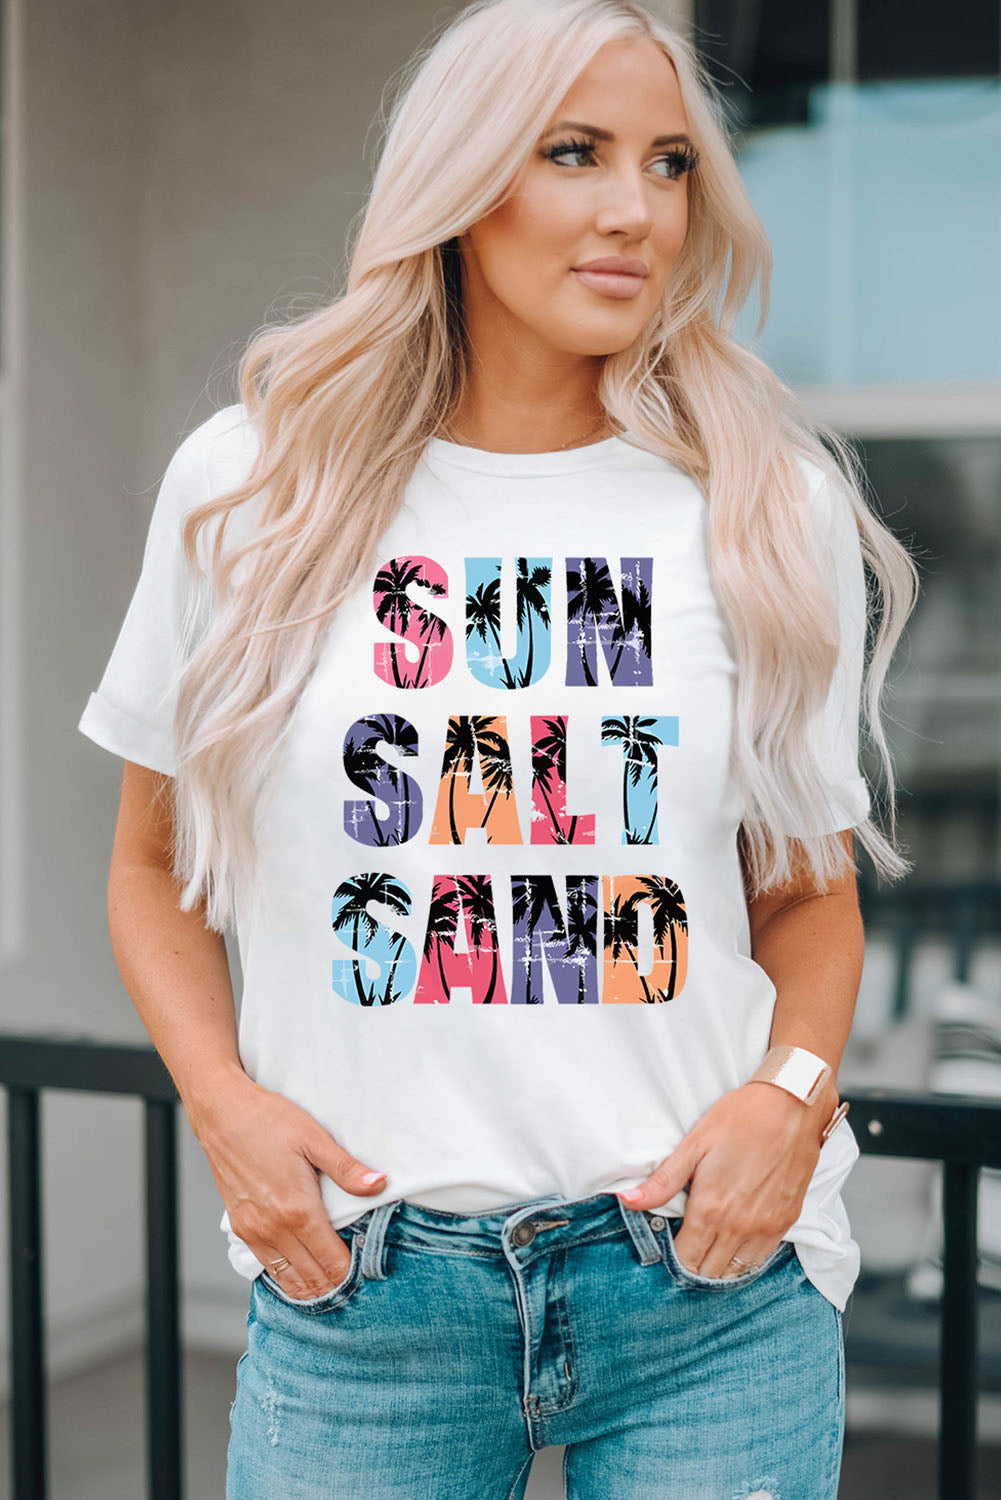 Sun Salt Sand Graphic Tee